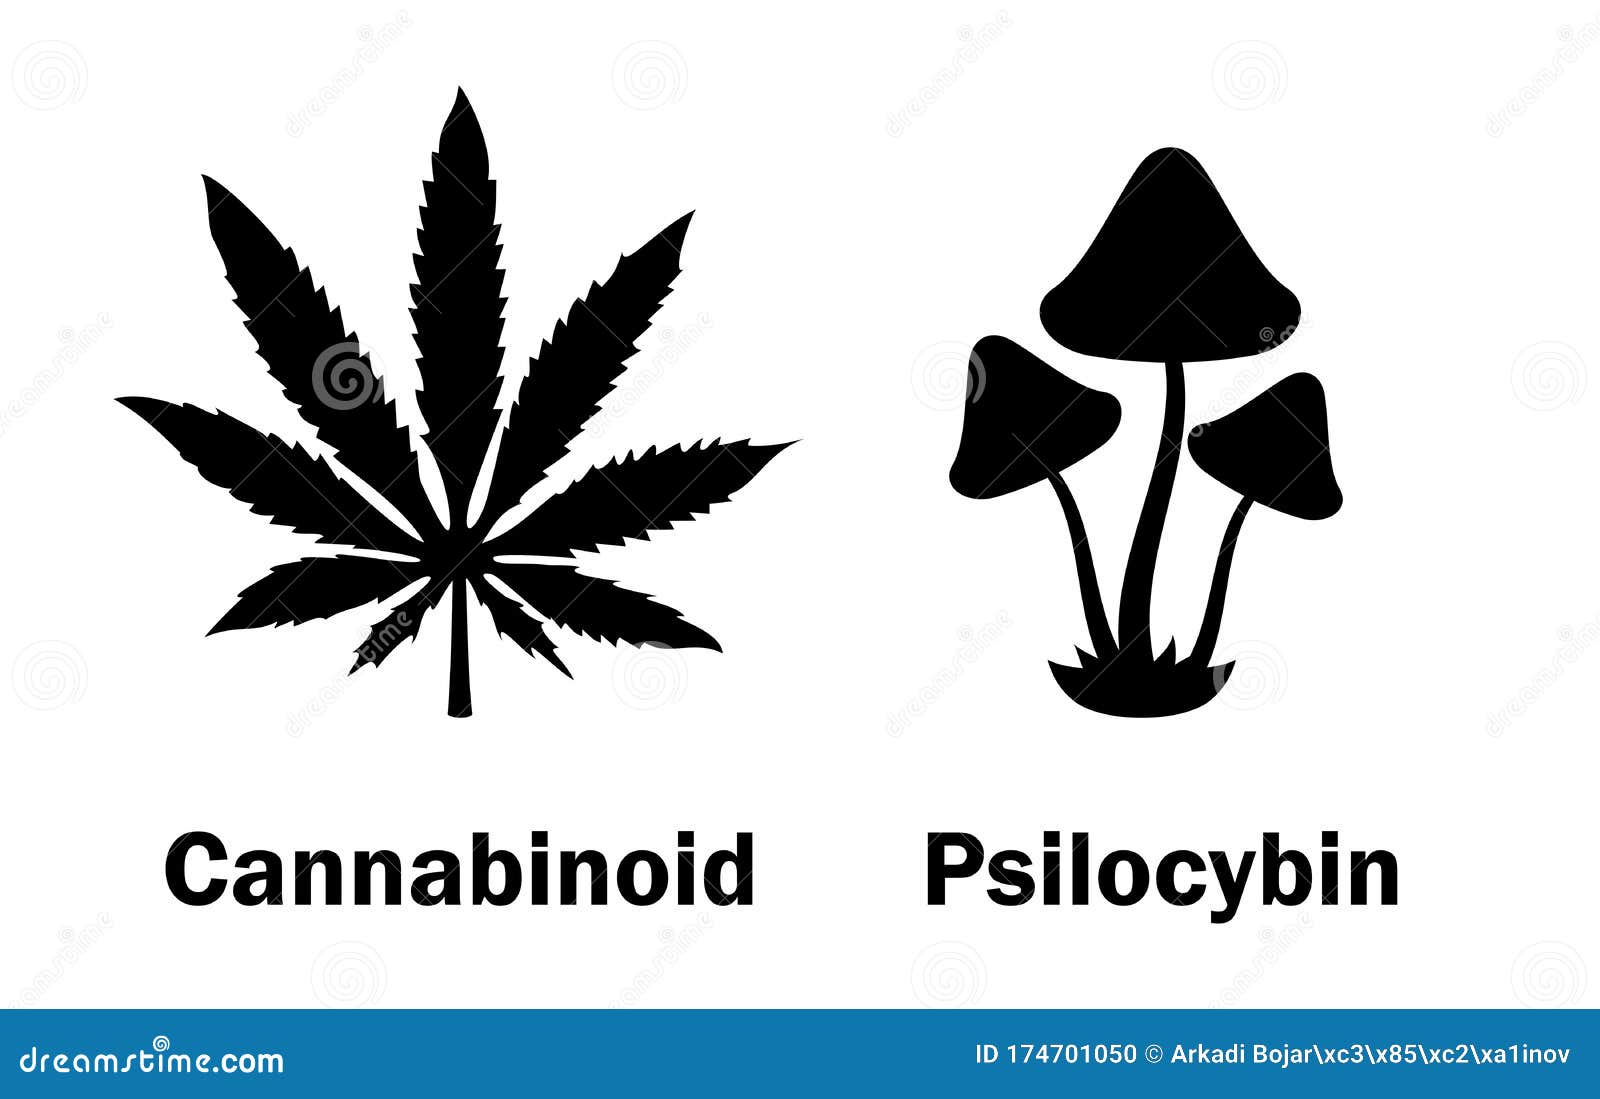 марихуана или галлюциногены